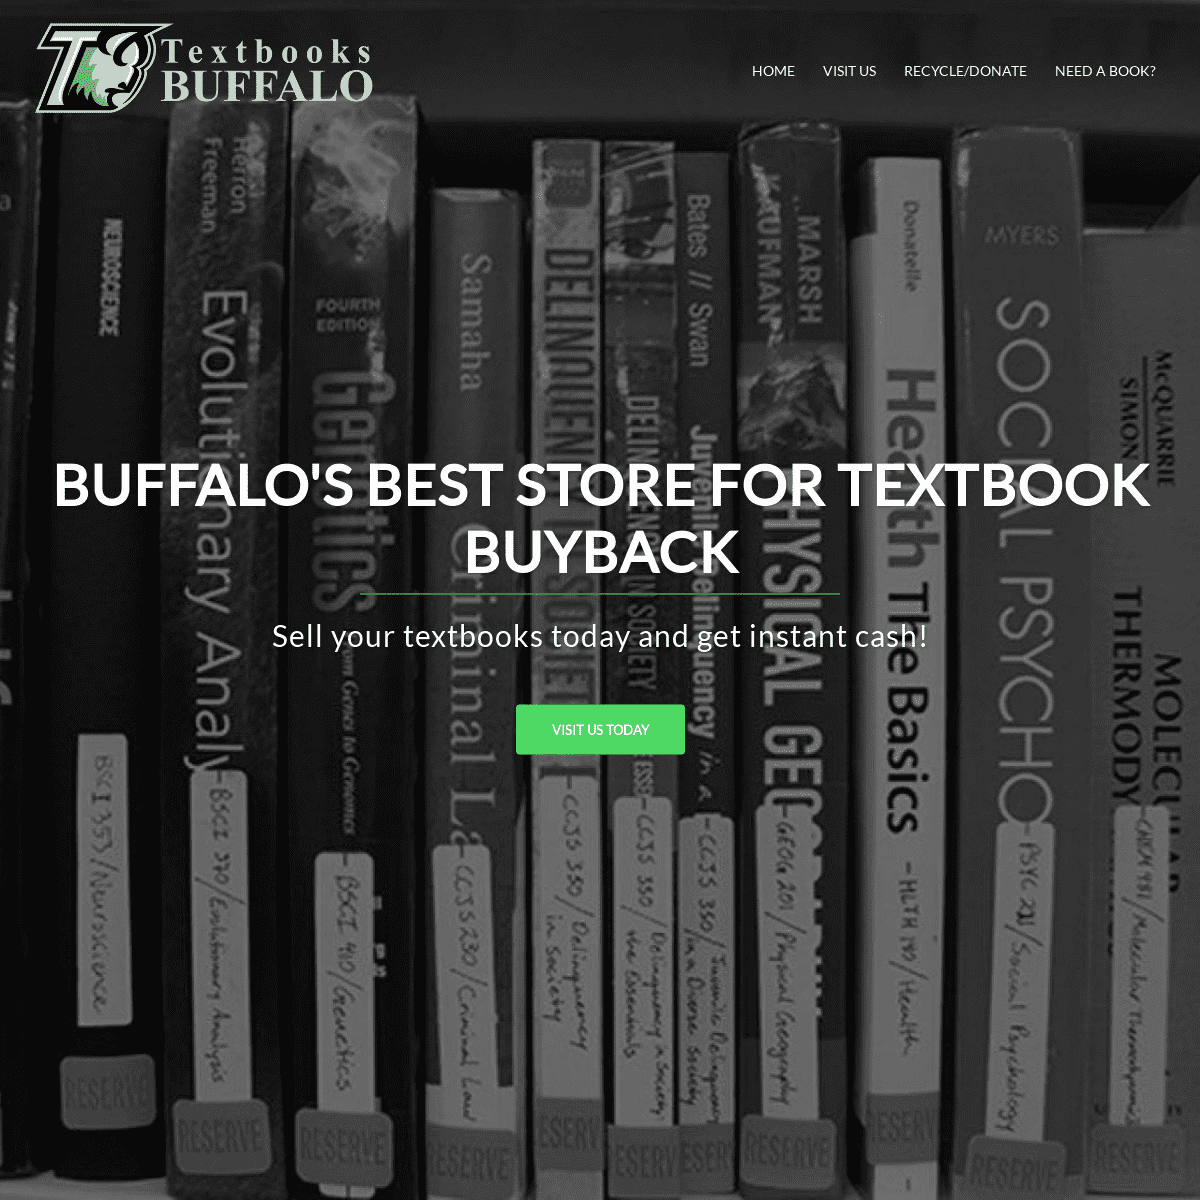 A complete backup of textbooksbuffalo.com